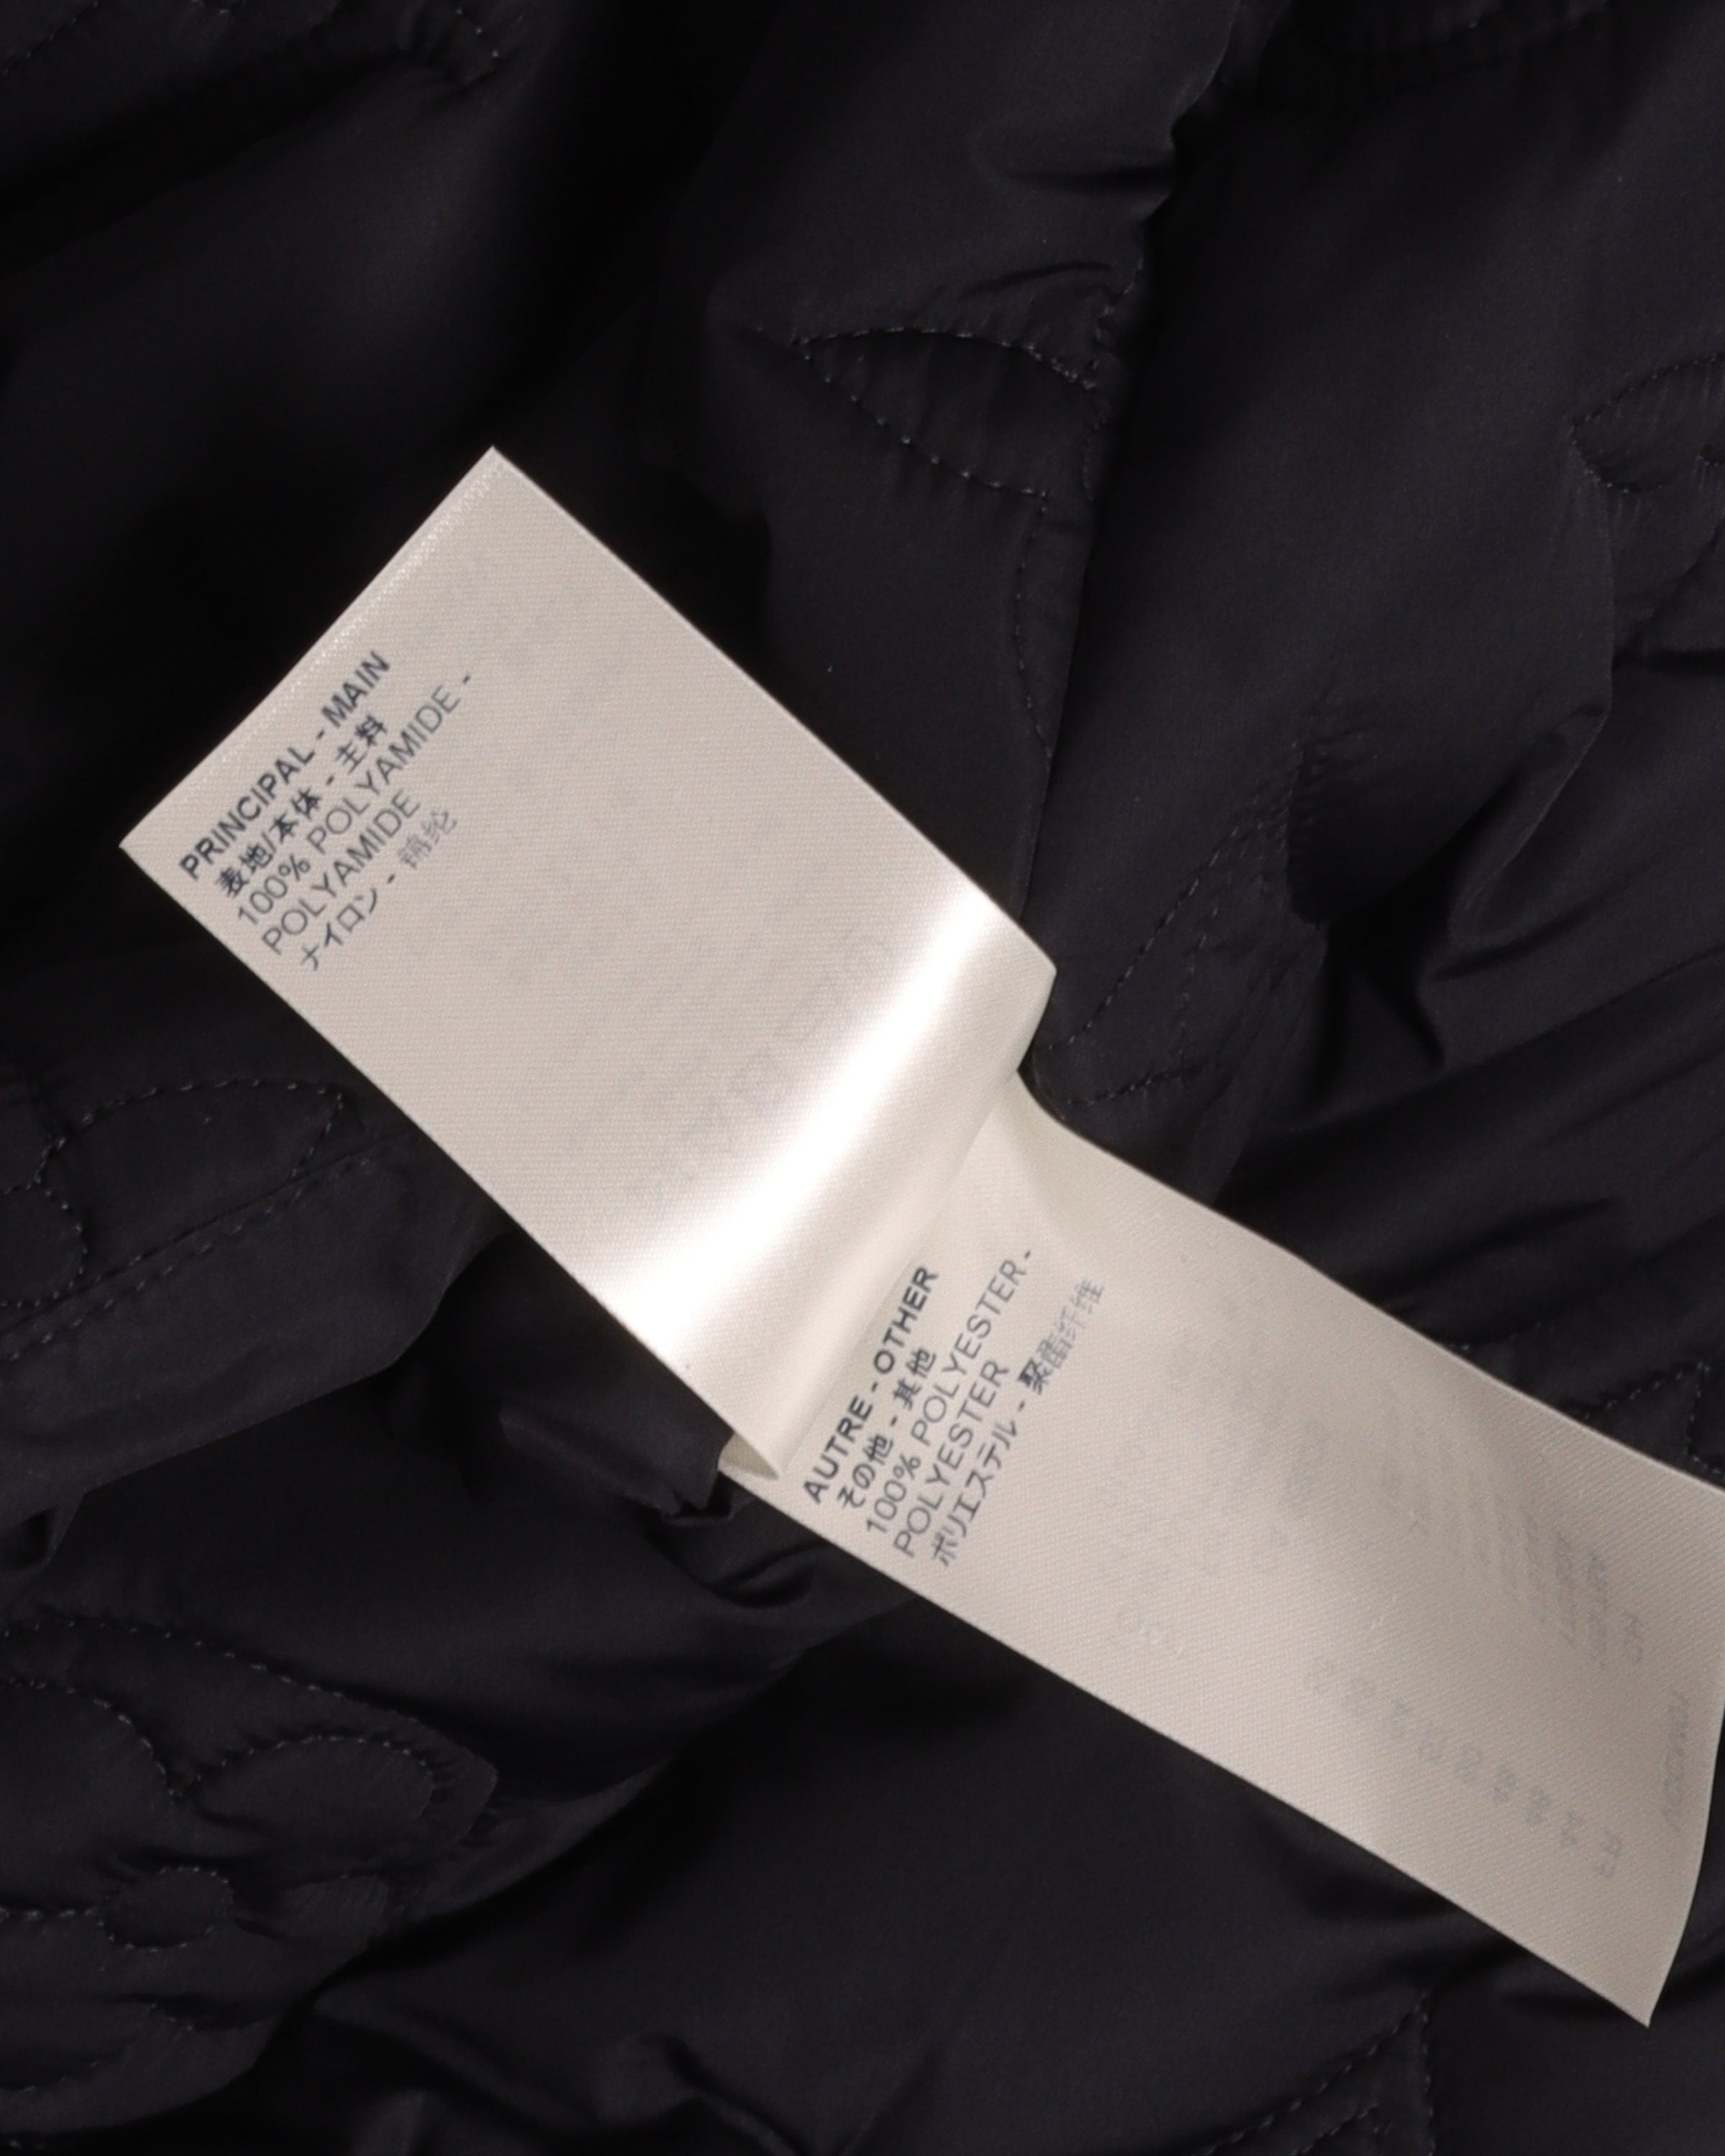 Louis Vuitton Velour Monogram Jackets For Mentor